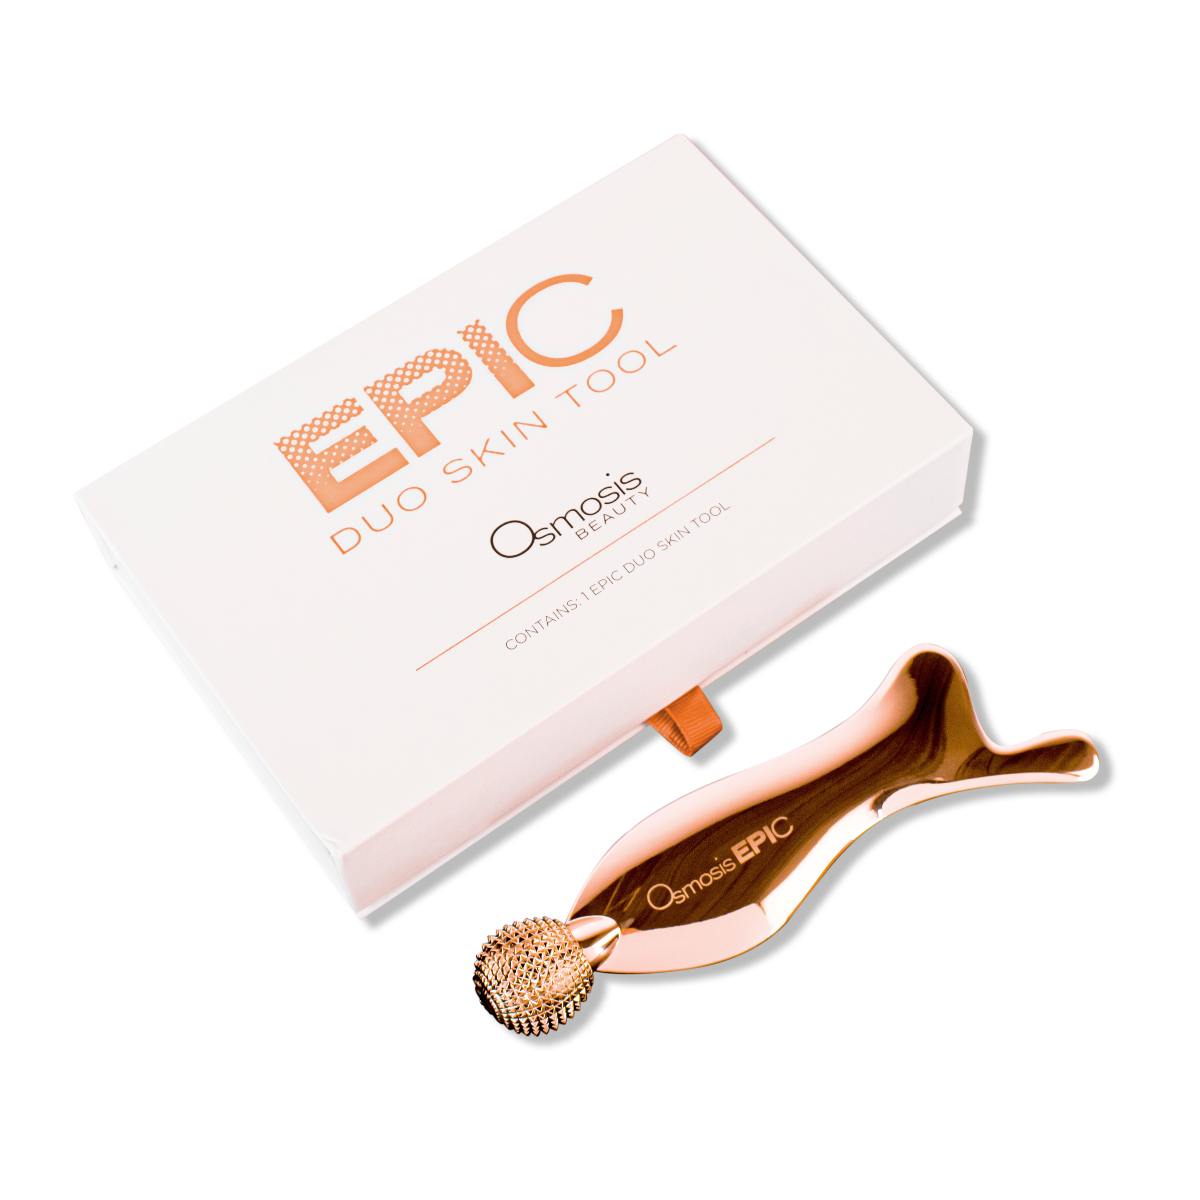 Osmosis EPIC Duo Skin Tool